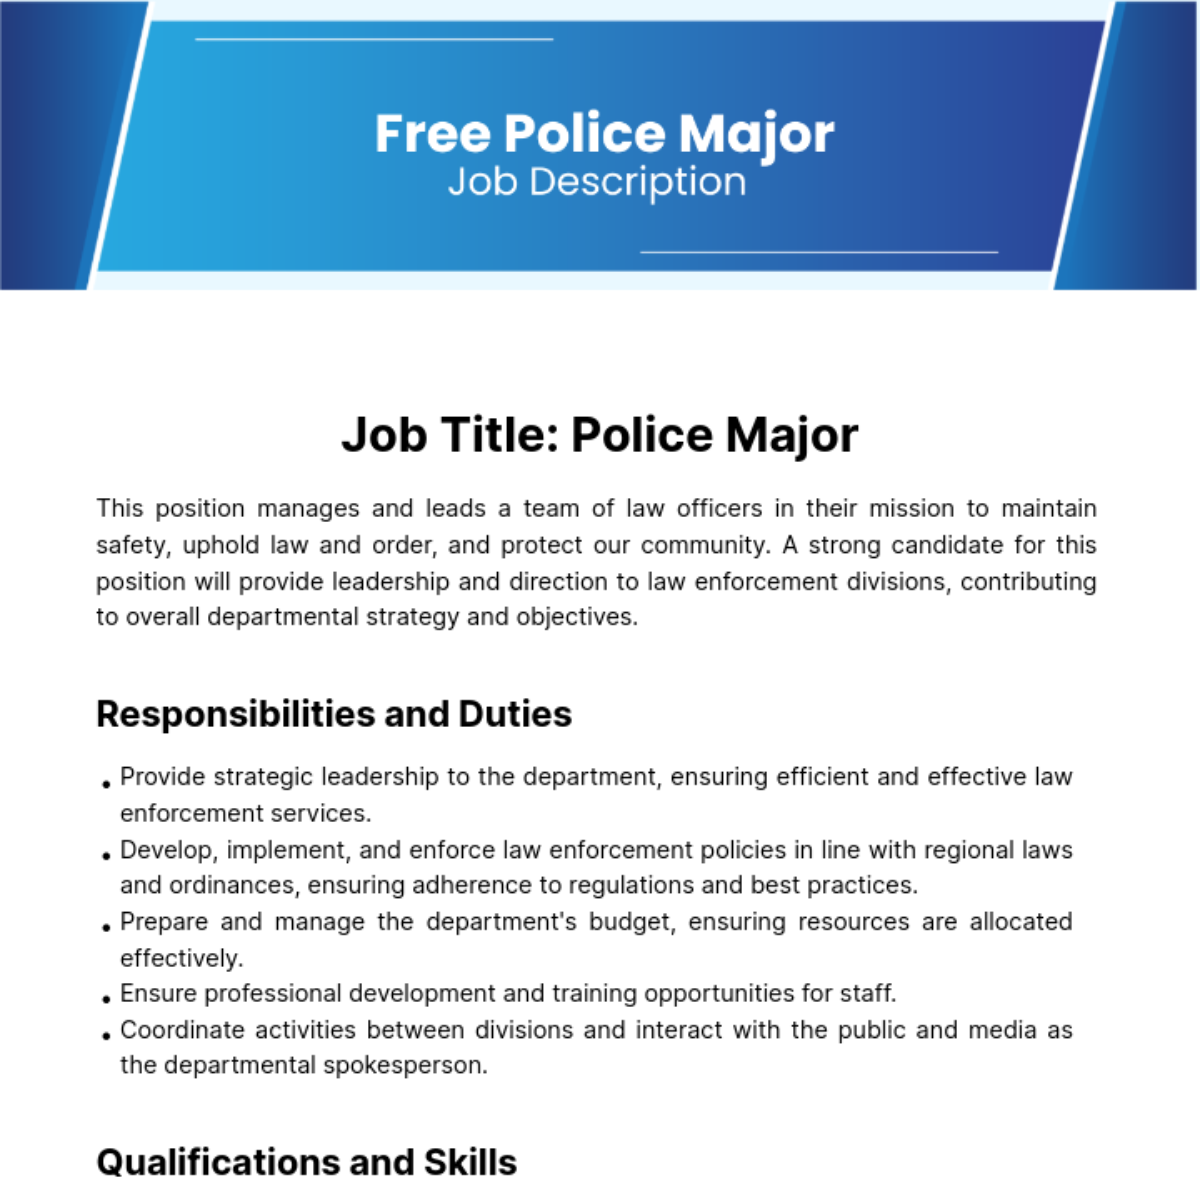 Free Police Major Job Description Template